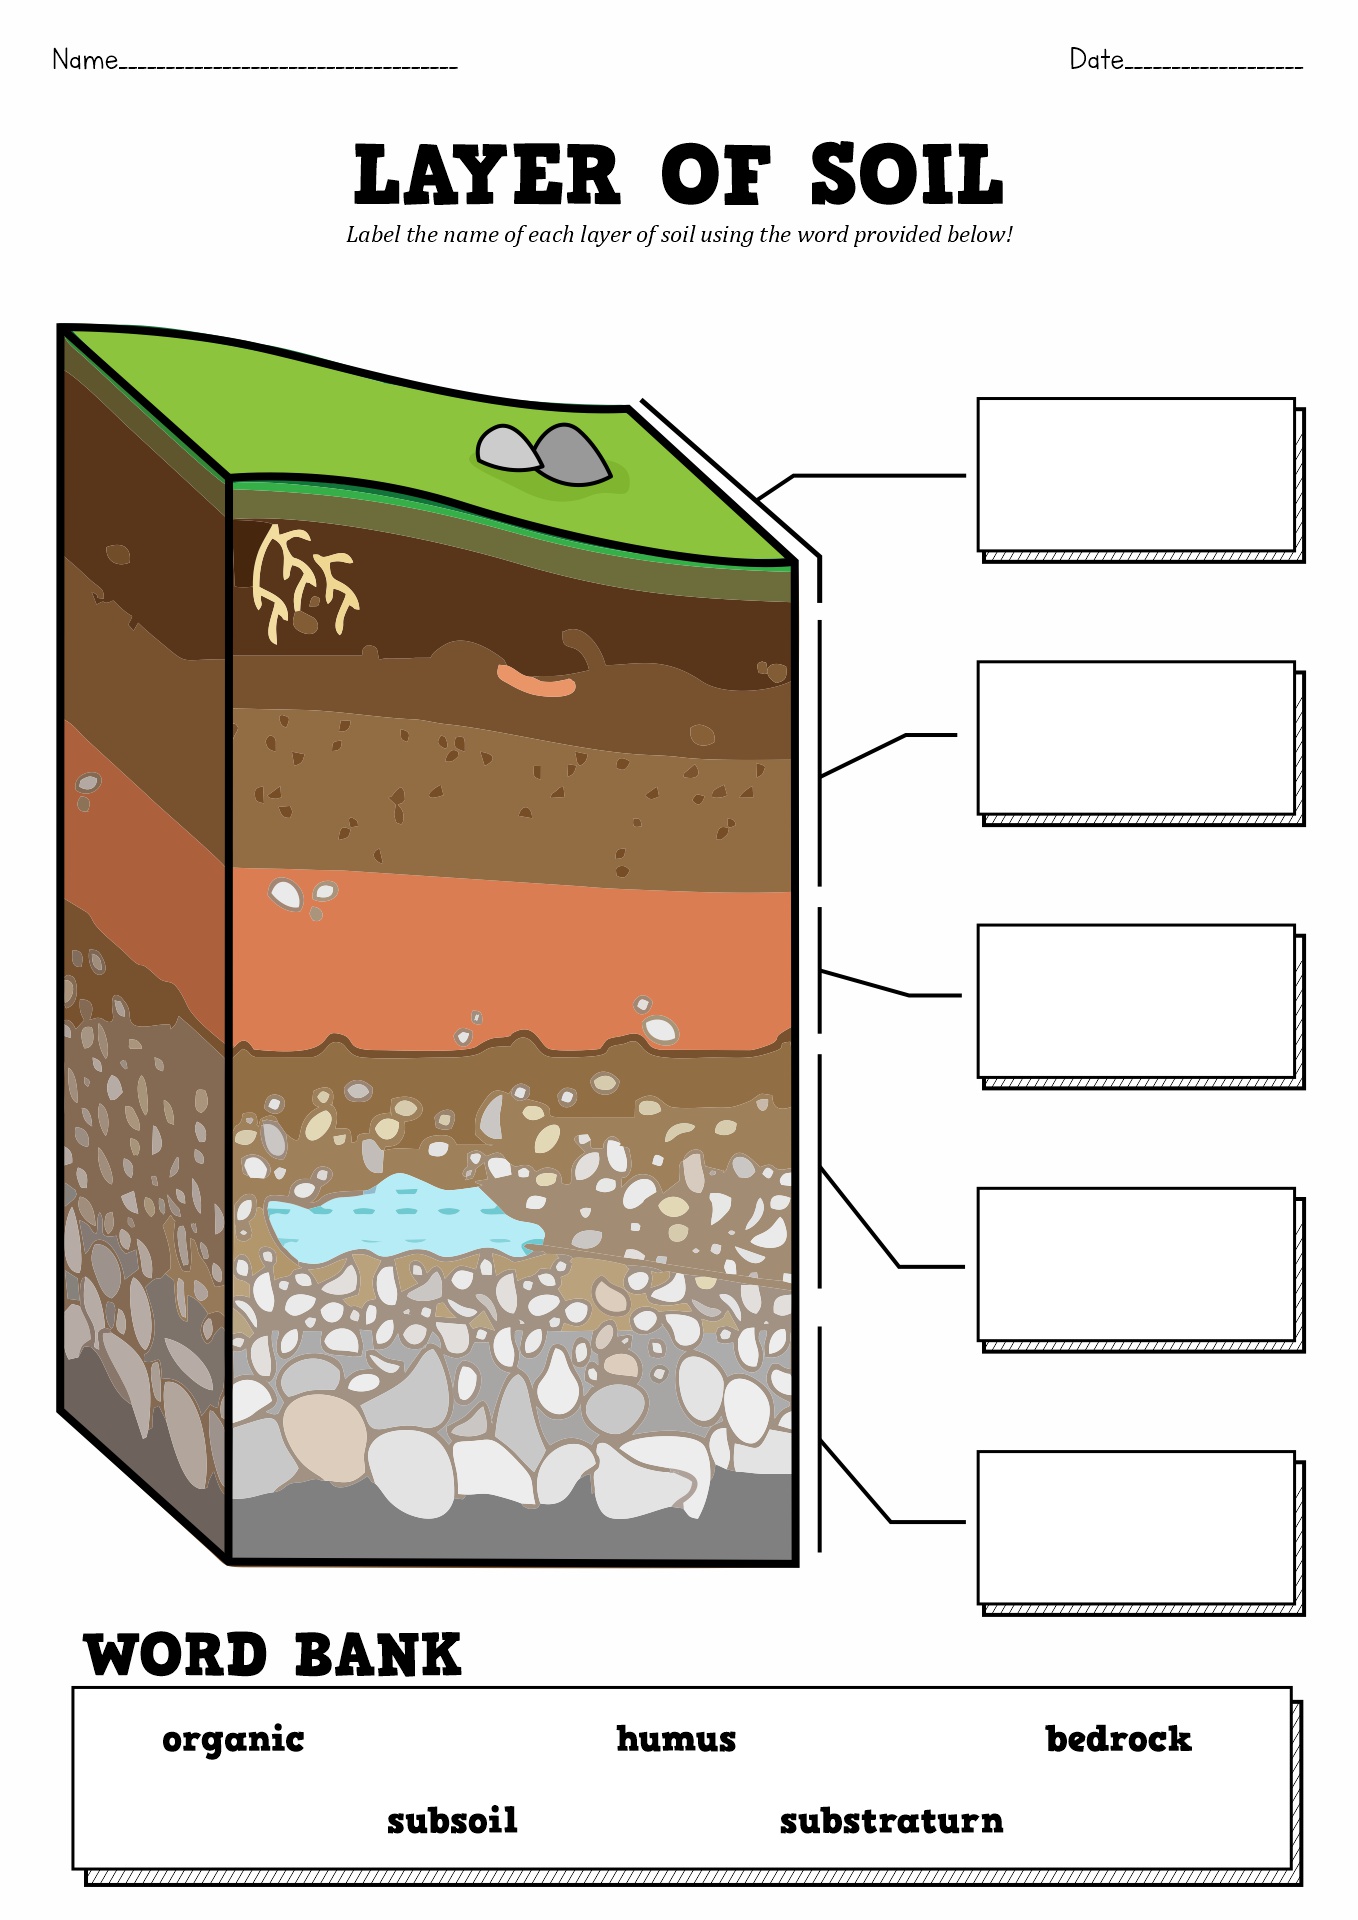 Label Soil Layers Diagram Image